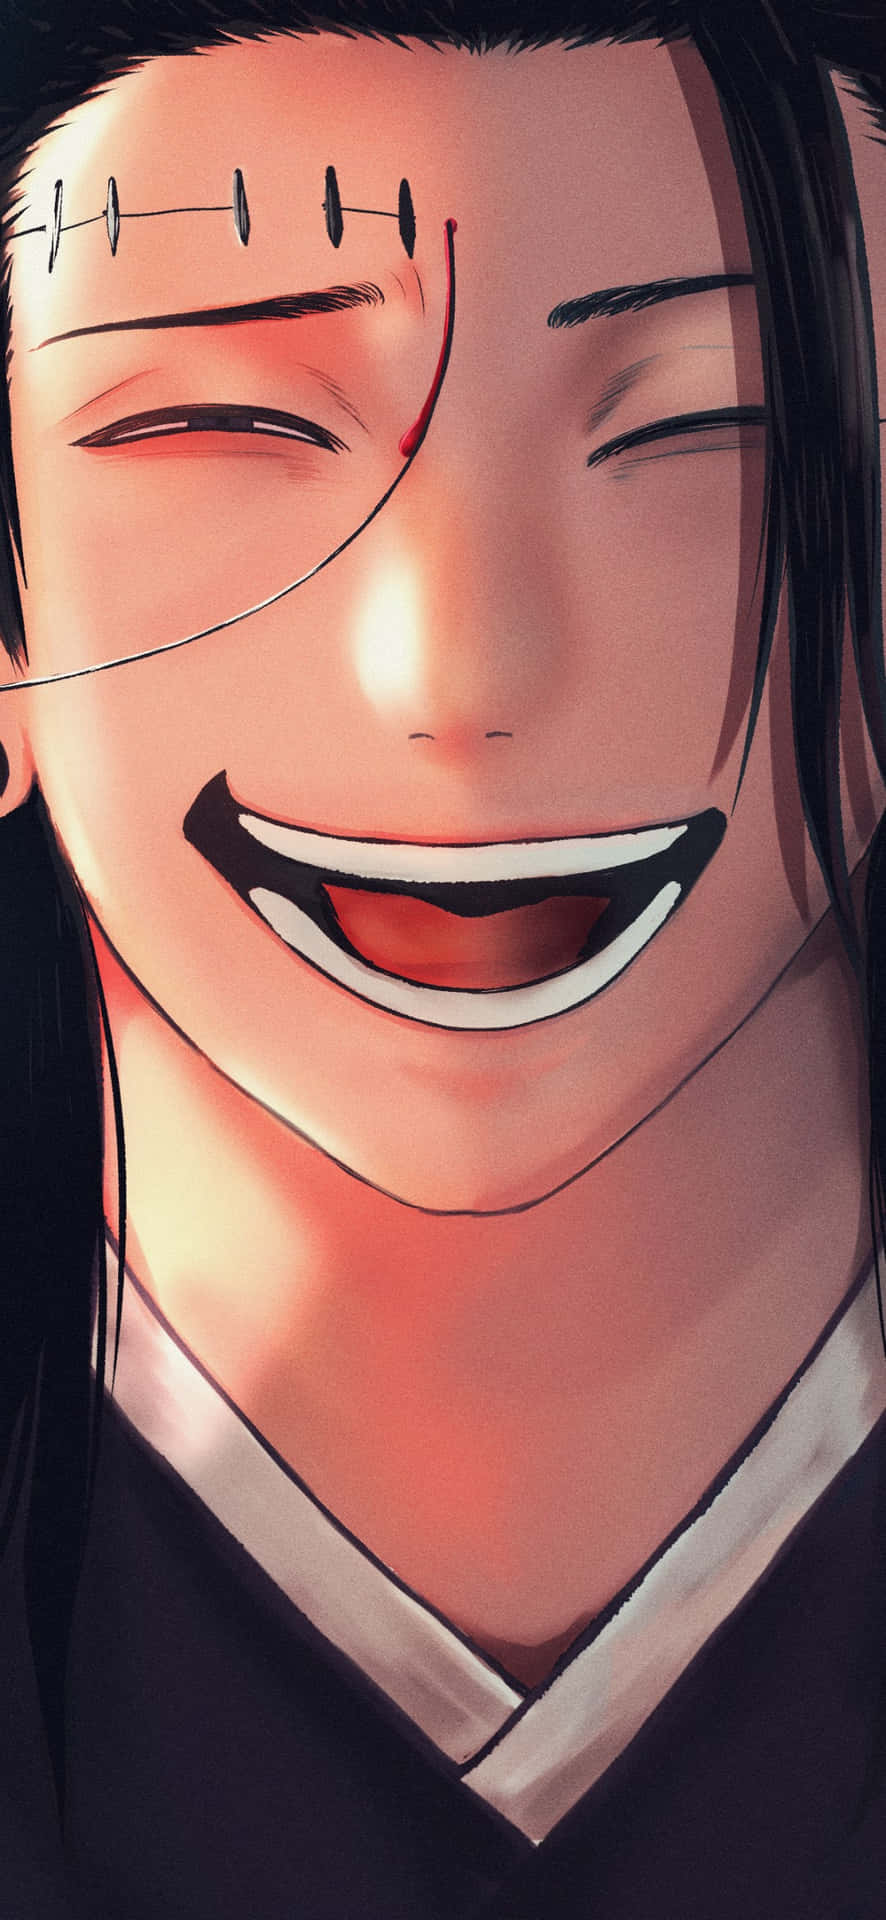 Suguru Geto Smiling Closeup Anime Art Wallpaper